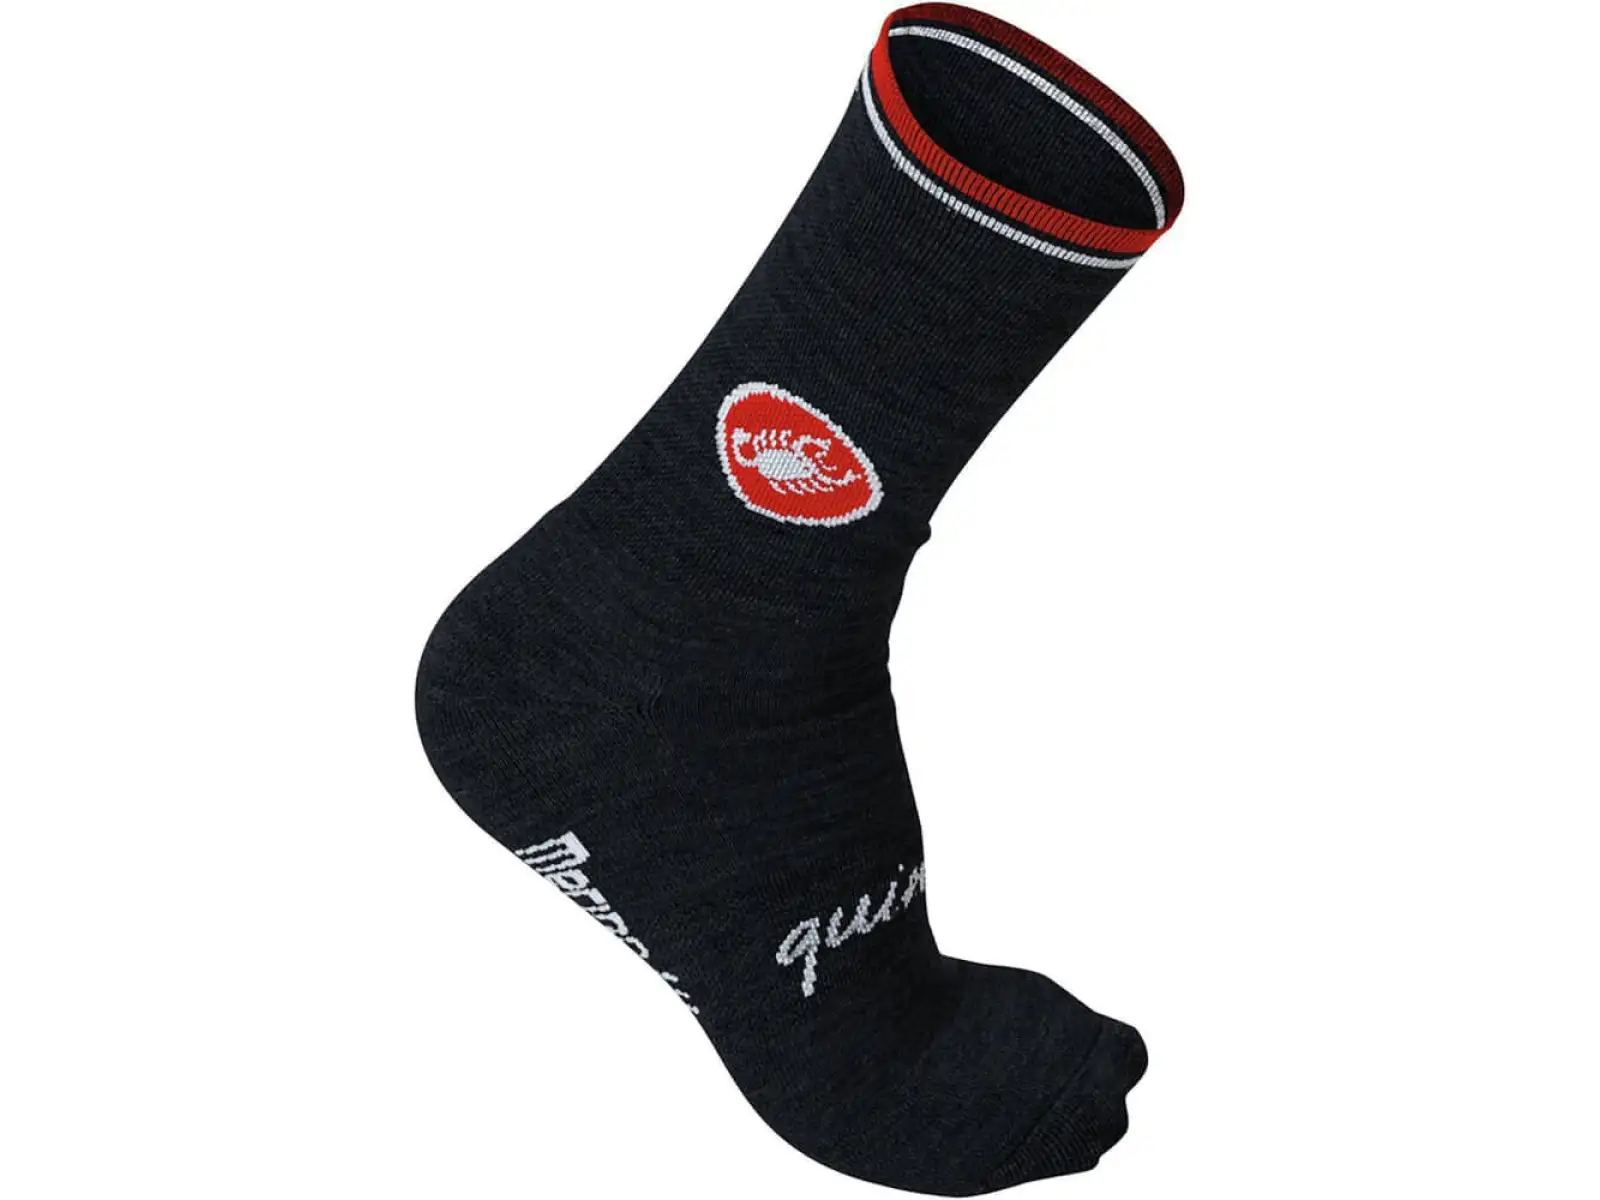 Castelli Quindici Soft ponožky Black